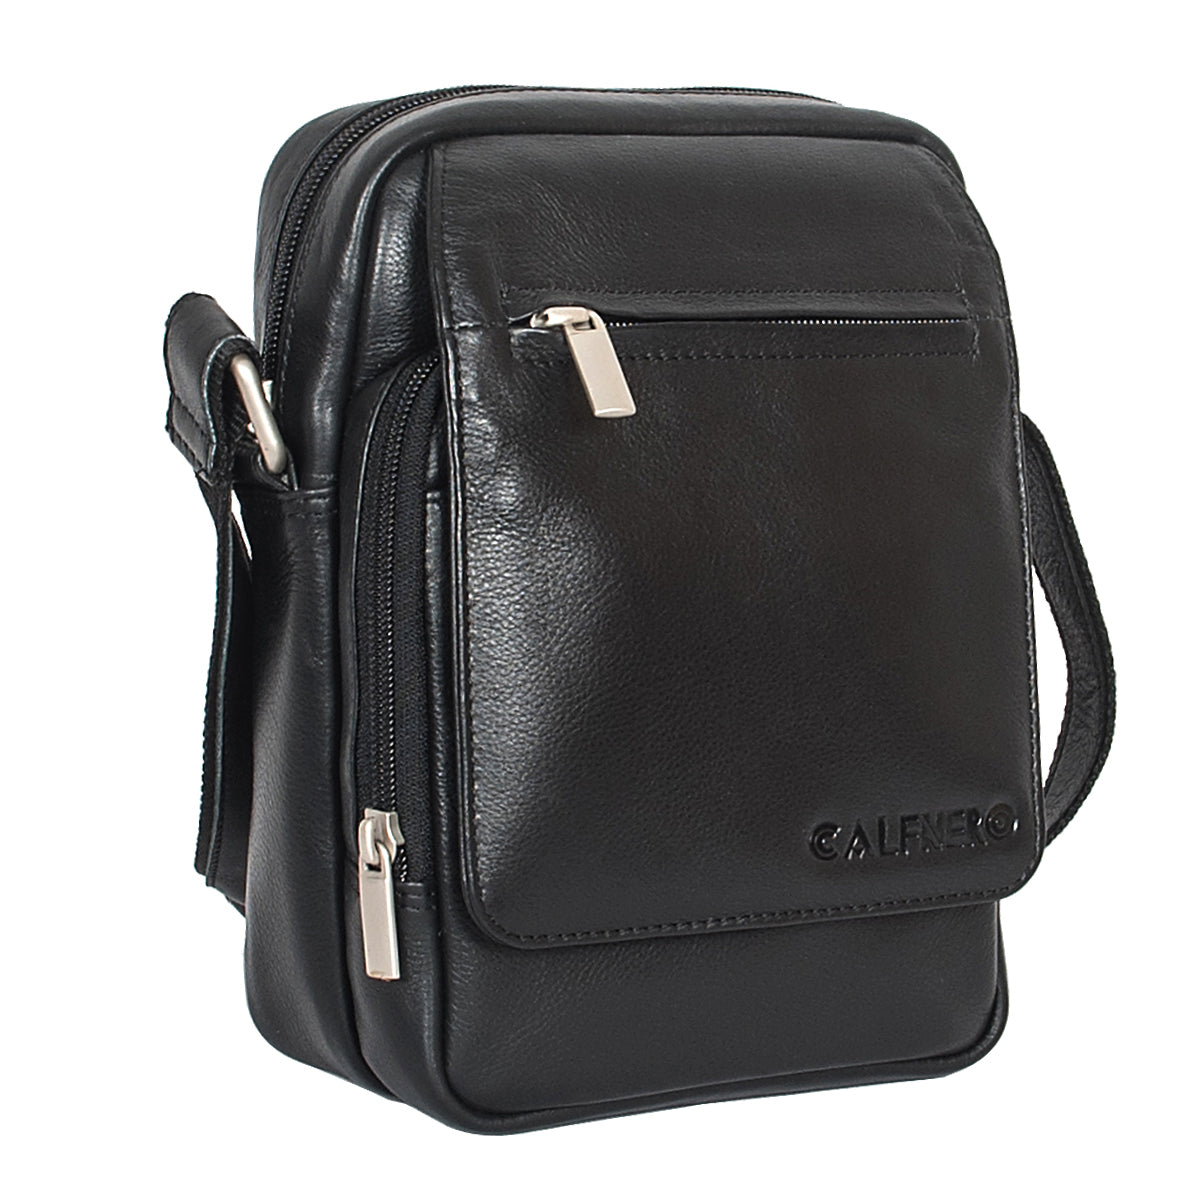 Calfnero Genuine Leather Men's Cross Body Bag (2217-Black)